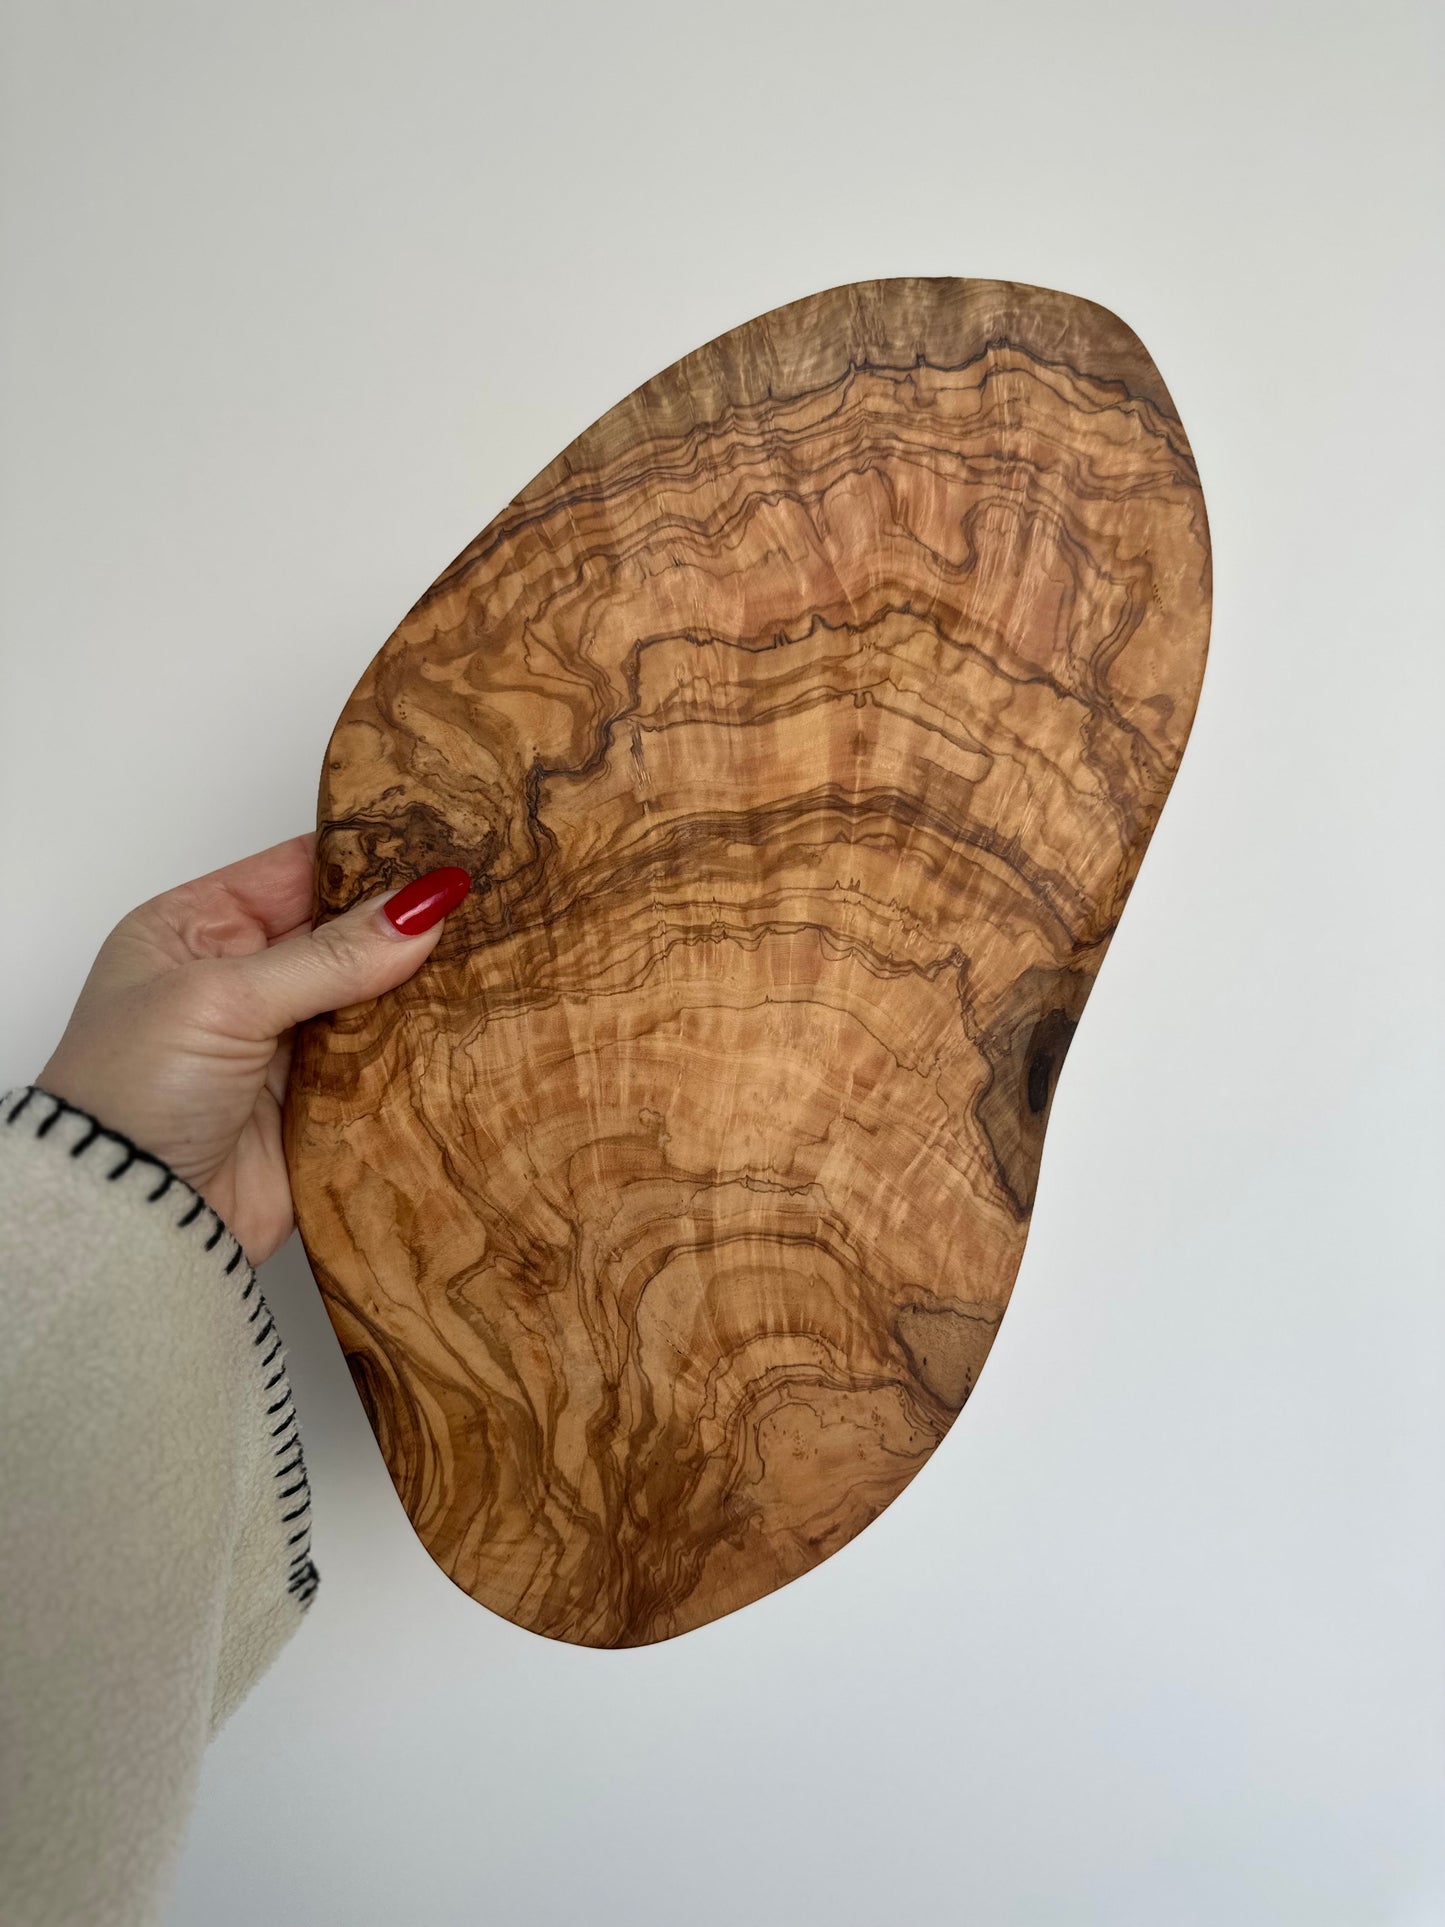 Olive Wood Cutting Board - 2 sizes